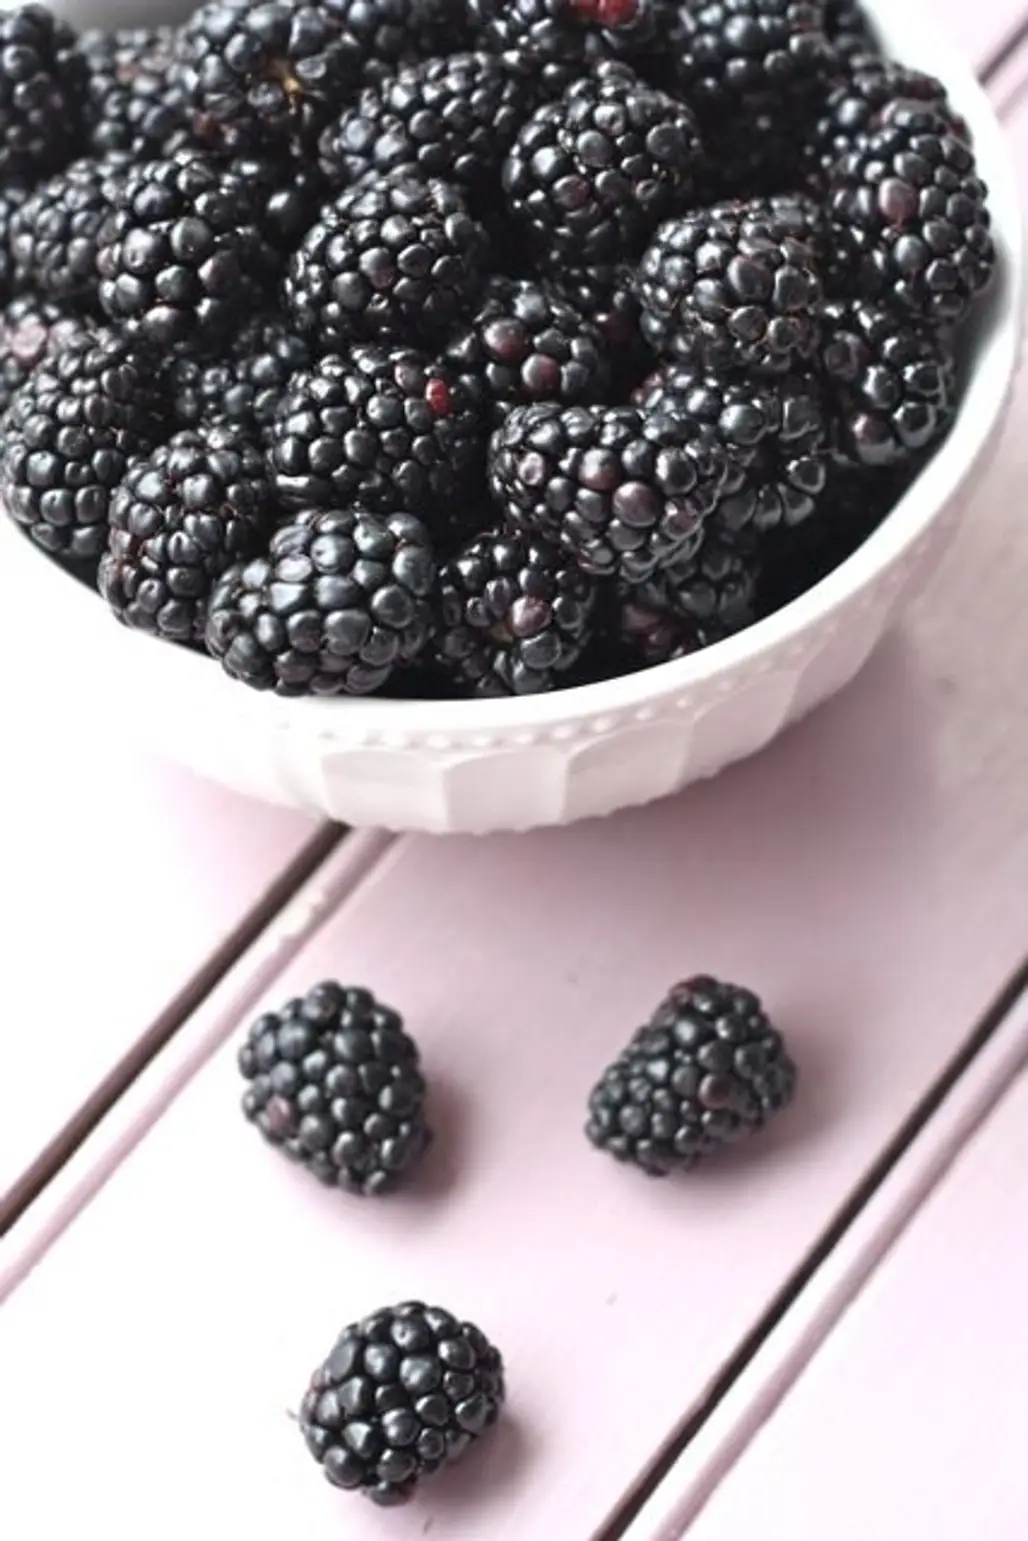 blackberry,food,berry,fruit,produce,